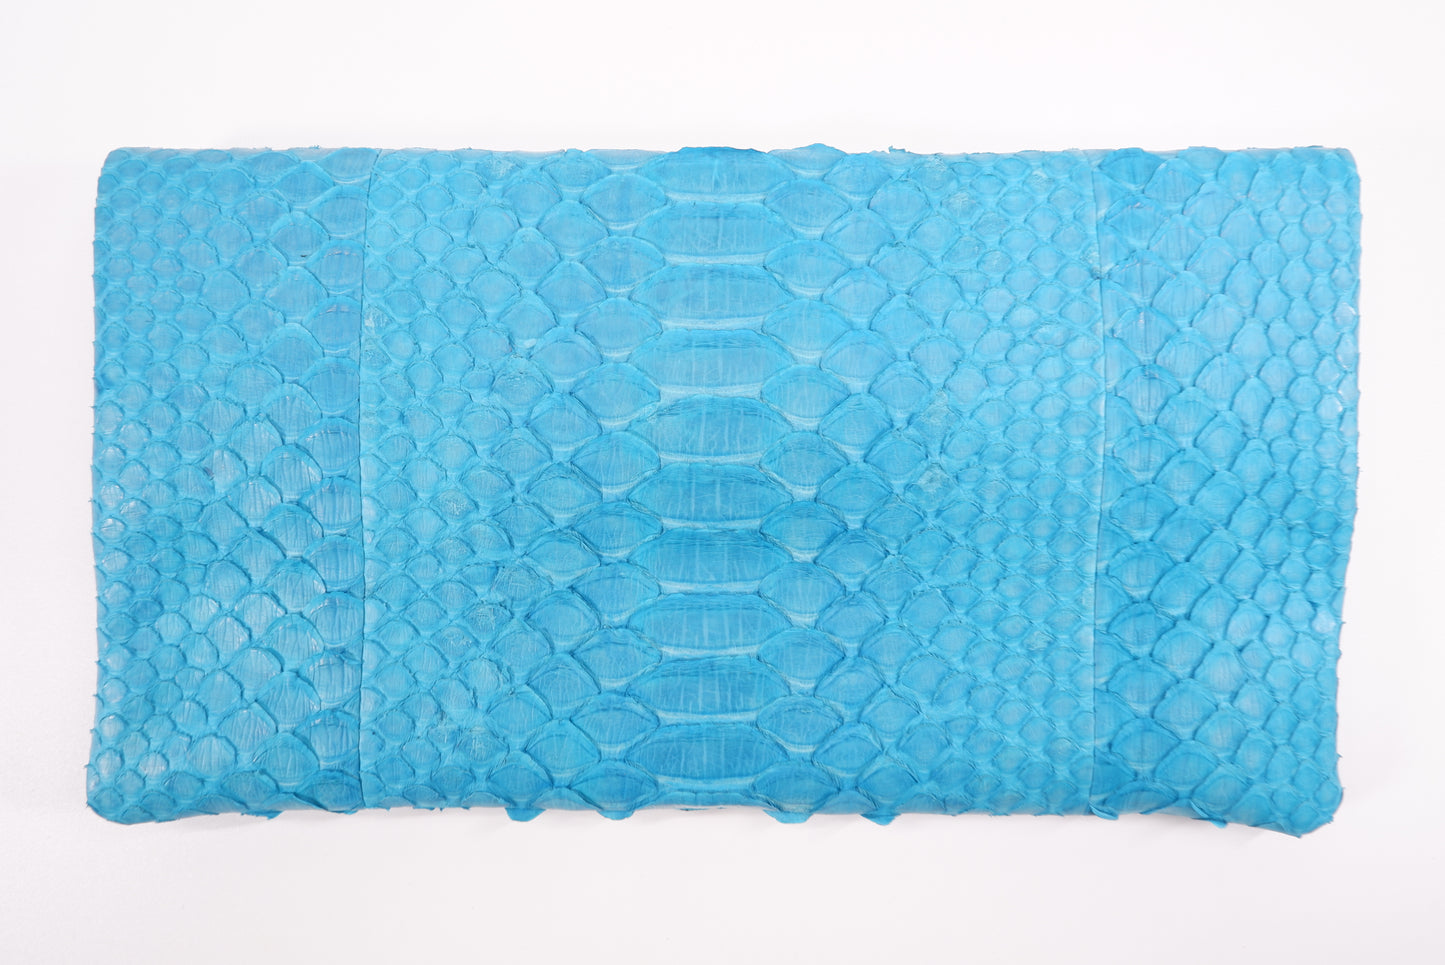 PELGIO Genuine Python Skin Leather Magnetic Fold Clutch Bag Purse